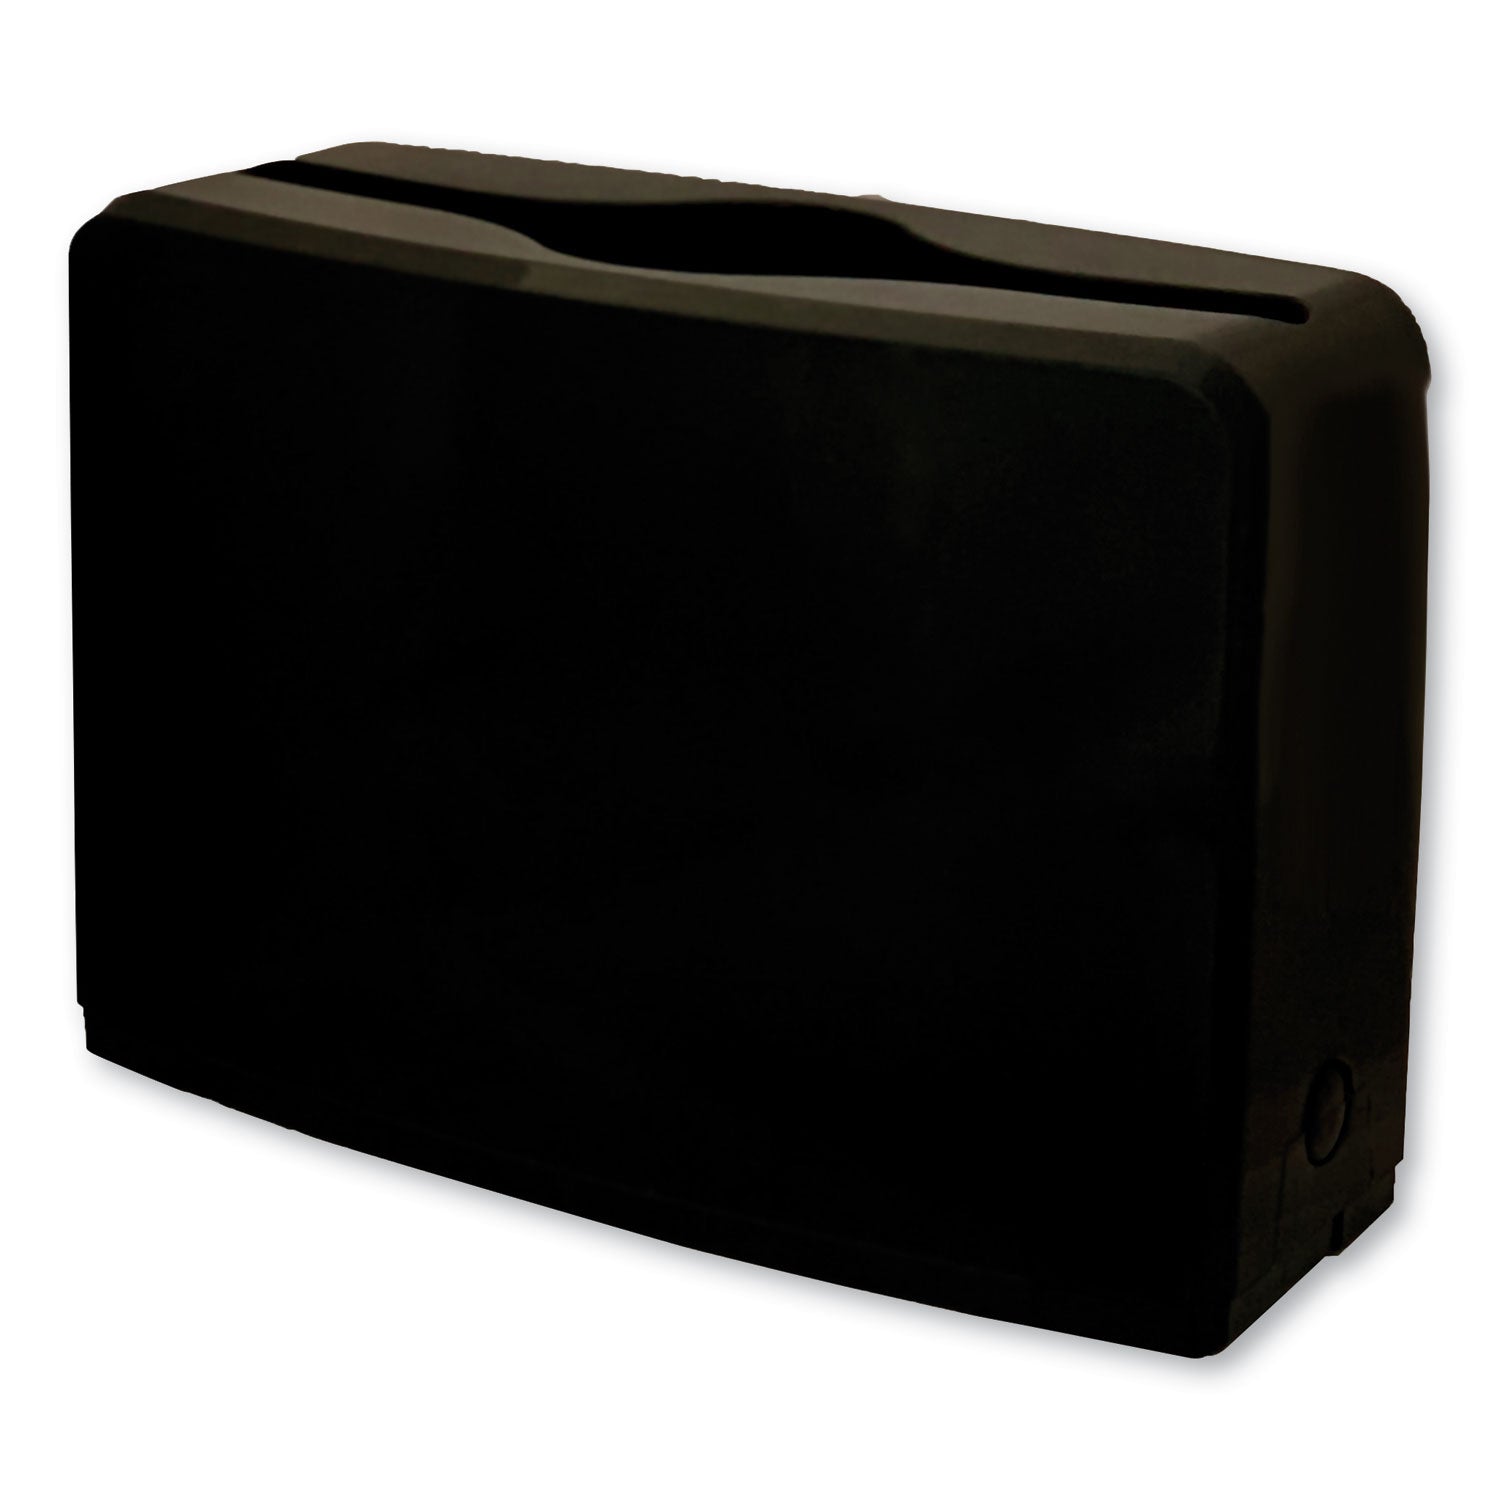 countertop-folded-towel-dispenser-1063-x-728-x-453-black_gen1607 - 1